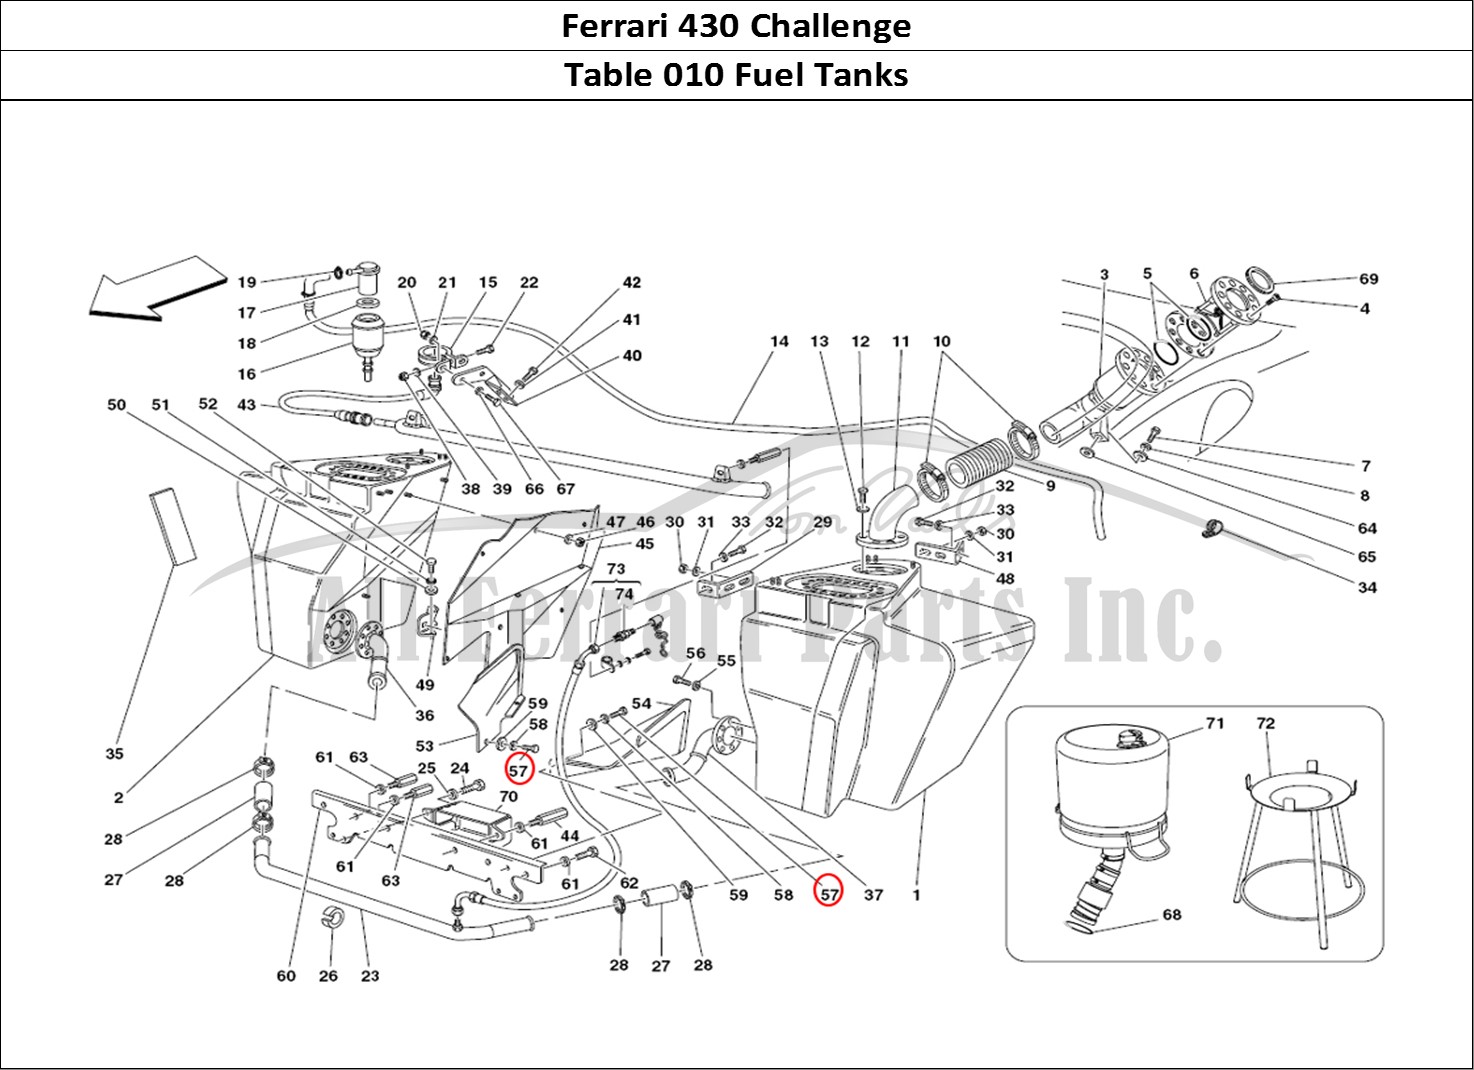 Ferrari Parts Ferrari 430 Challenge (2006) Page 010 Fuel Tanks